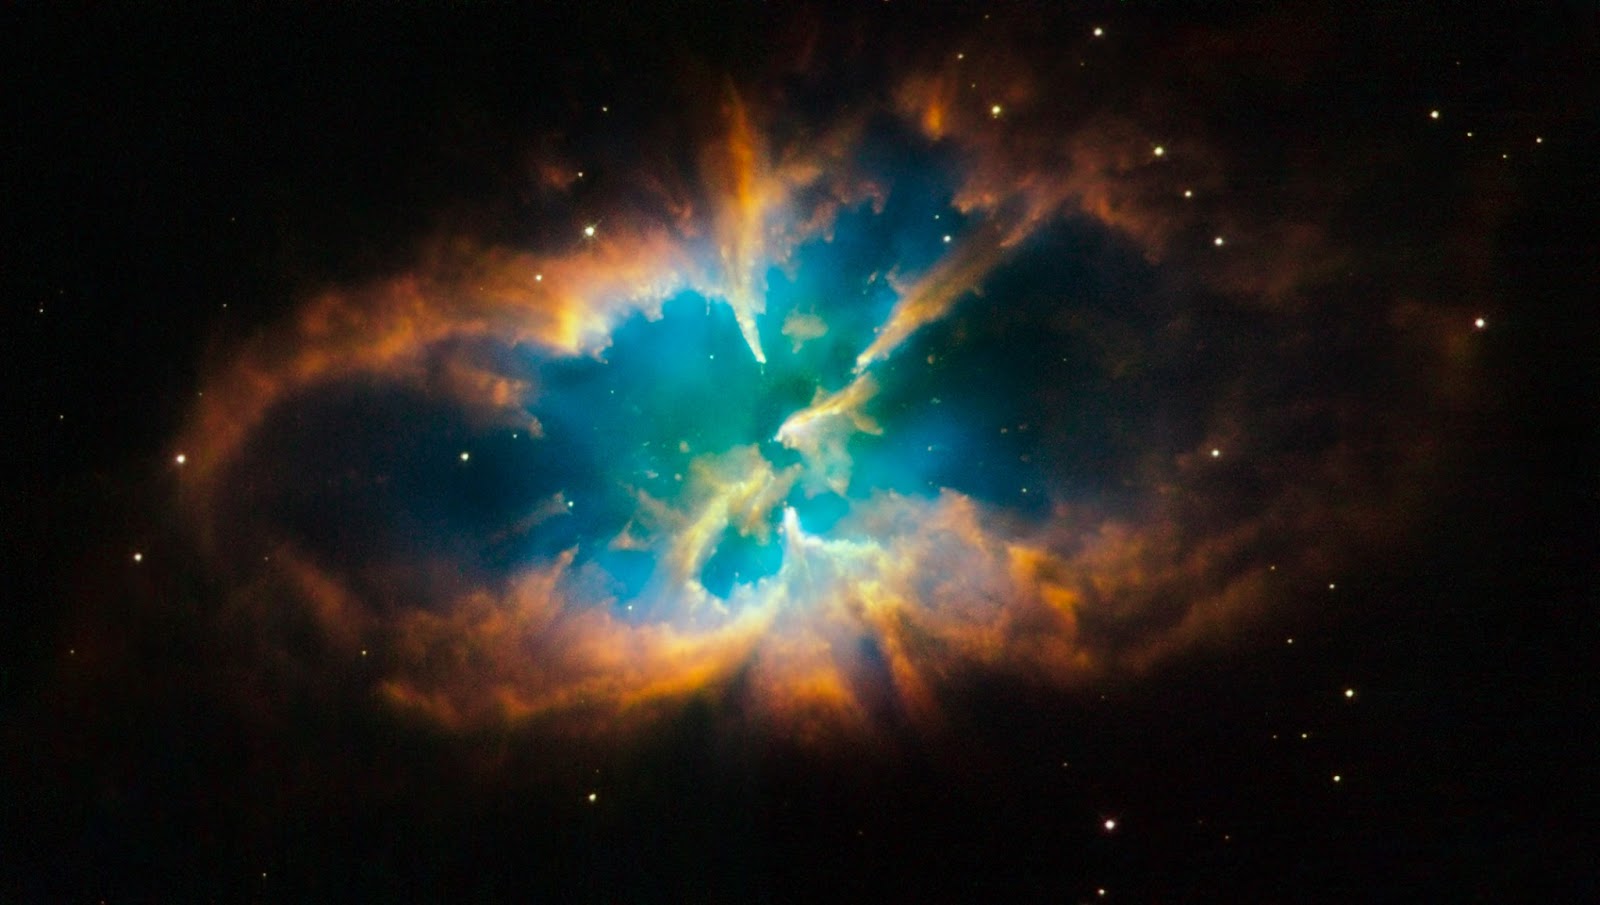 http://3.bp.blogspot.com/-gPlwITvb76M/UPvW8JXSNtI/AAAAAAAAAG0/sHEYHef6oGs/s1600/NGC_2818_by_the_Hubble_Space_Telescope.jpg